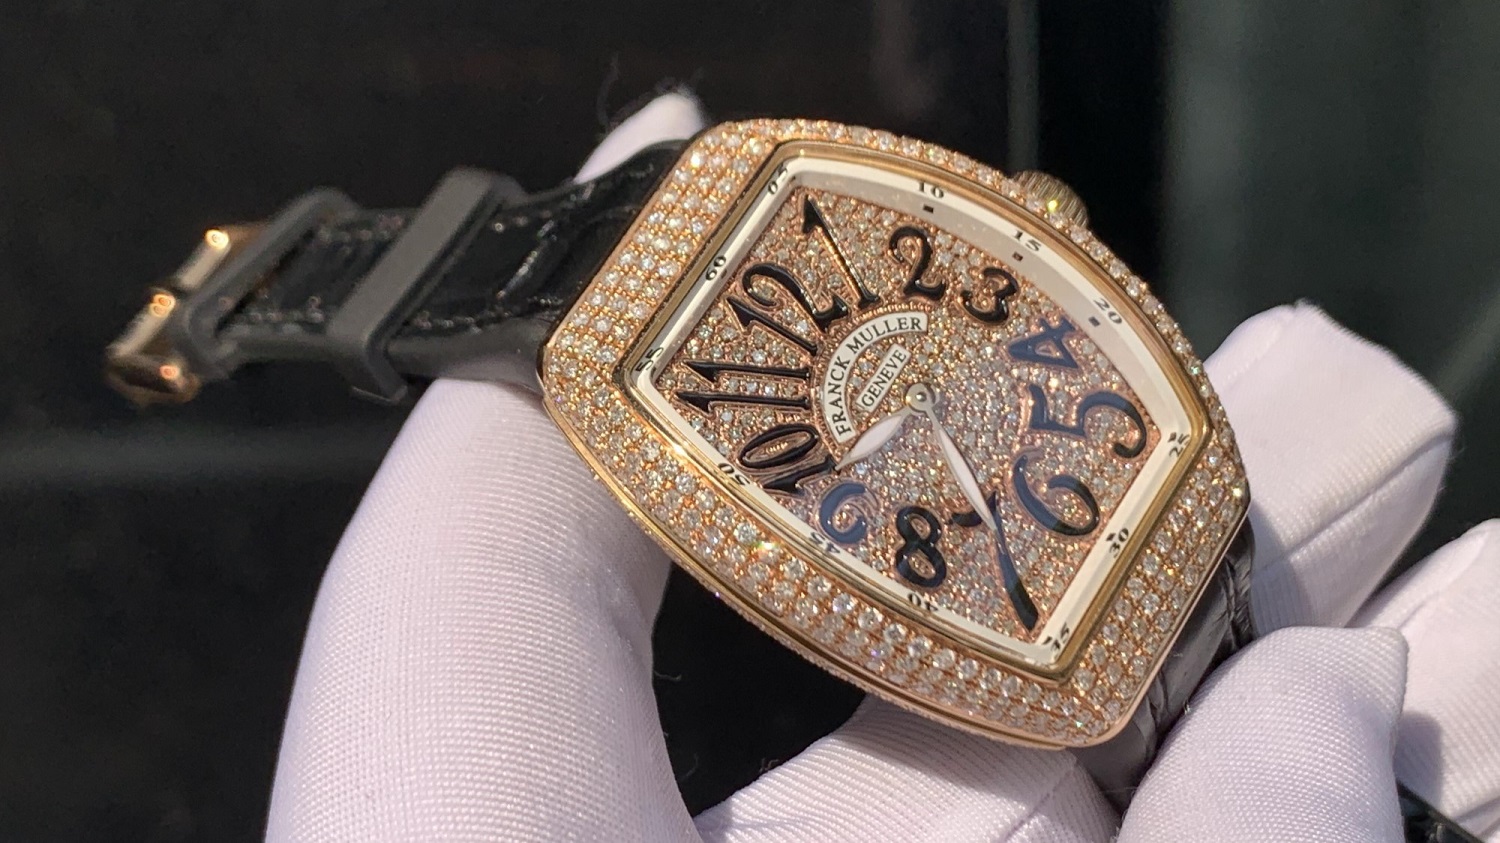  Top đồng hồ Franck Muller nữ đáng mua nhất 2022